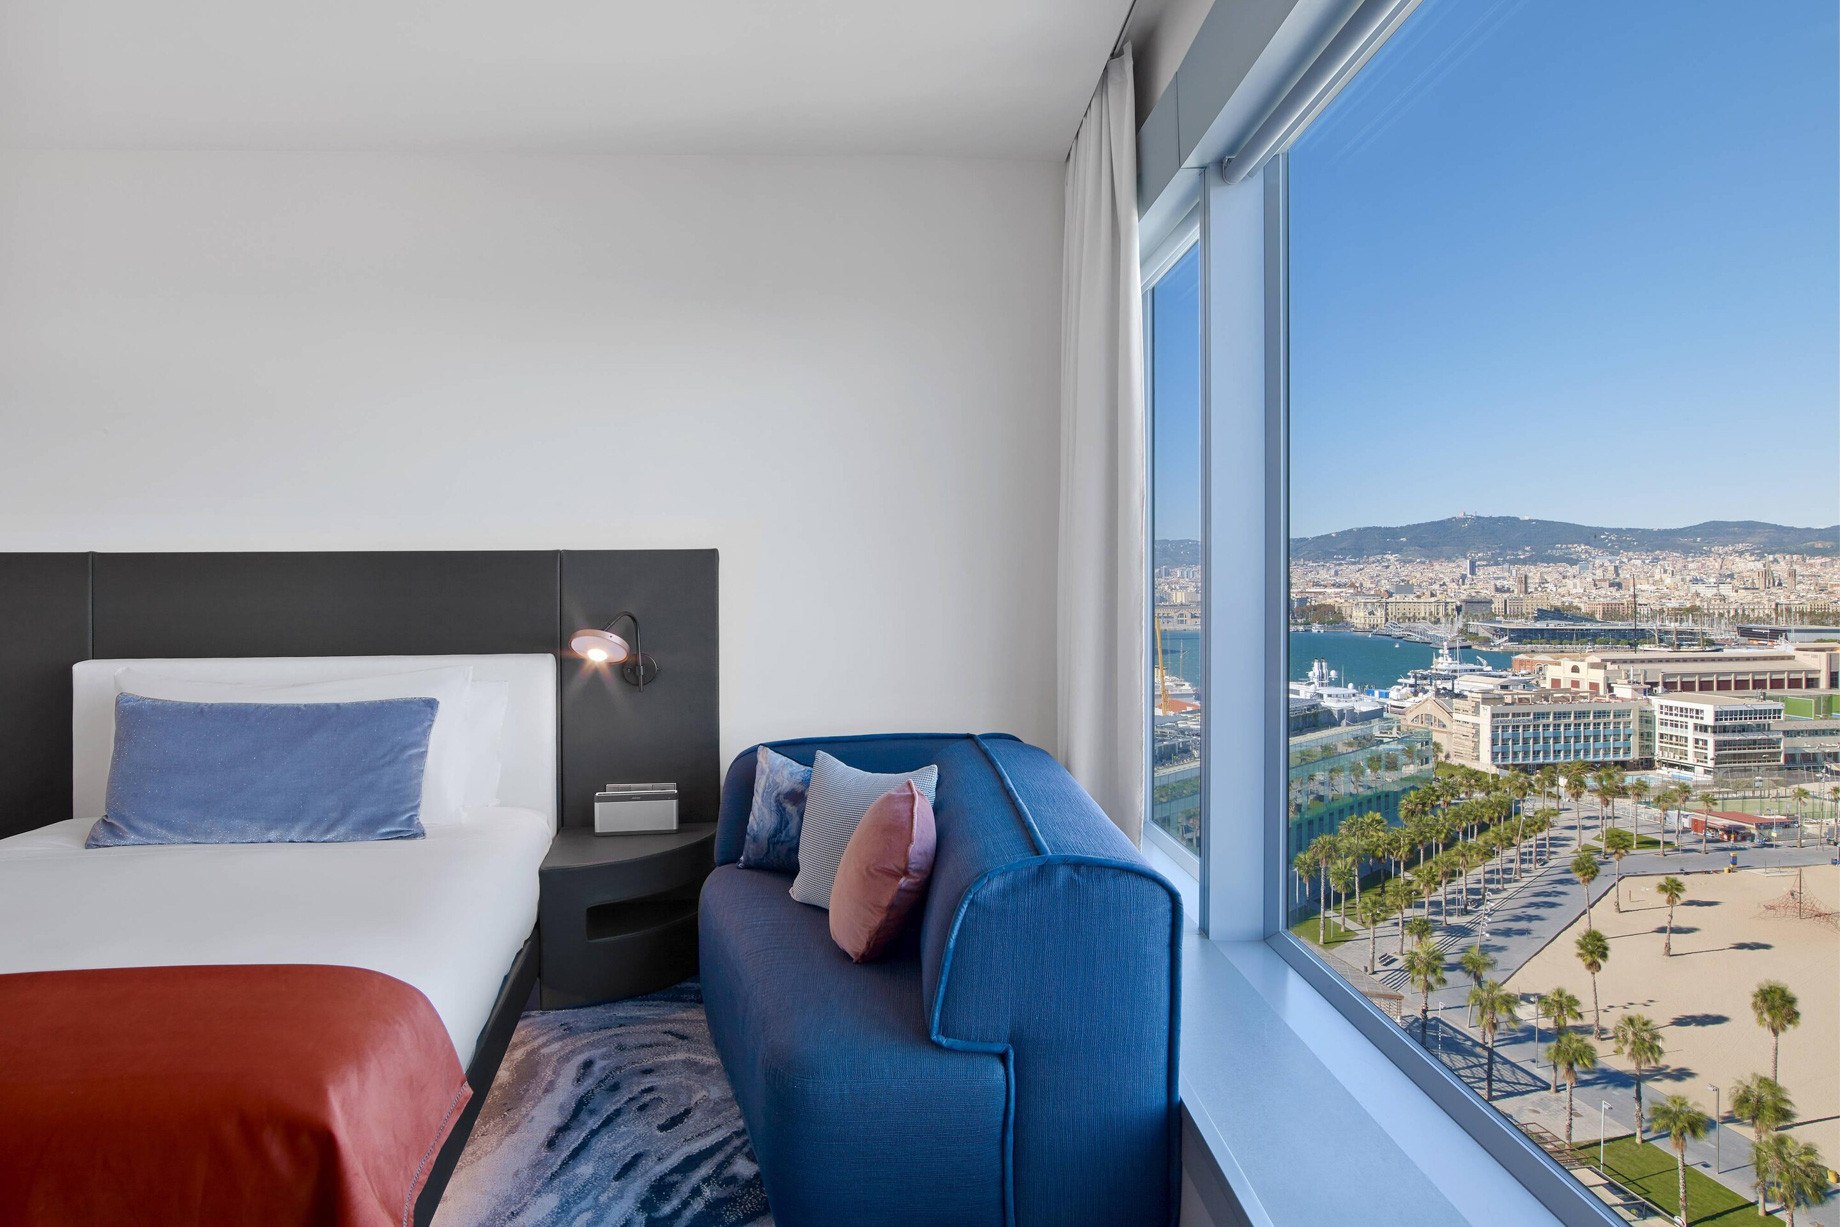 W Barcelona Hotel - Barcelona, Spain - Fabulous Guest Room View